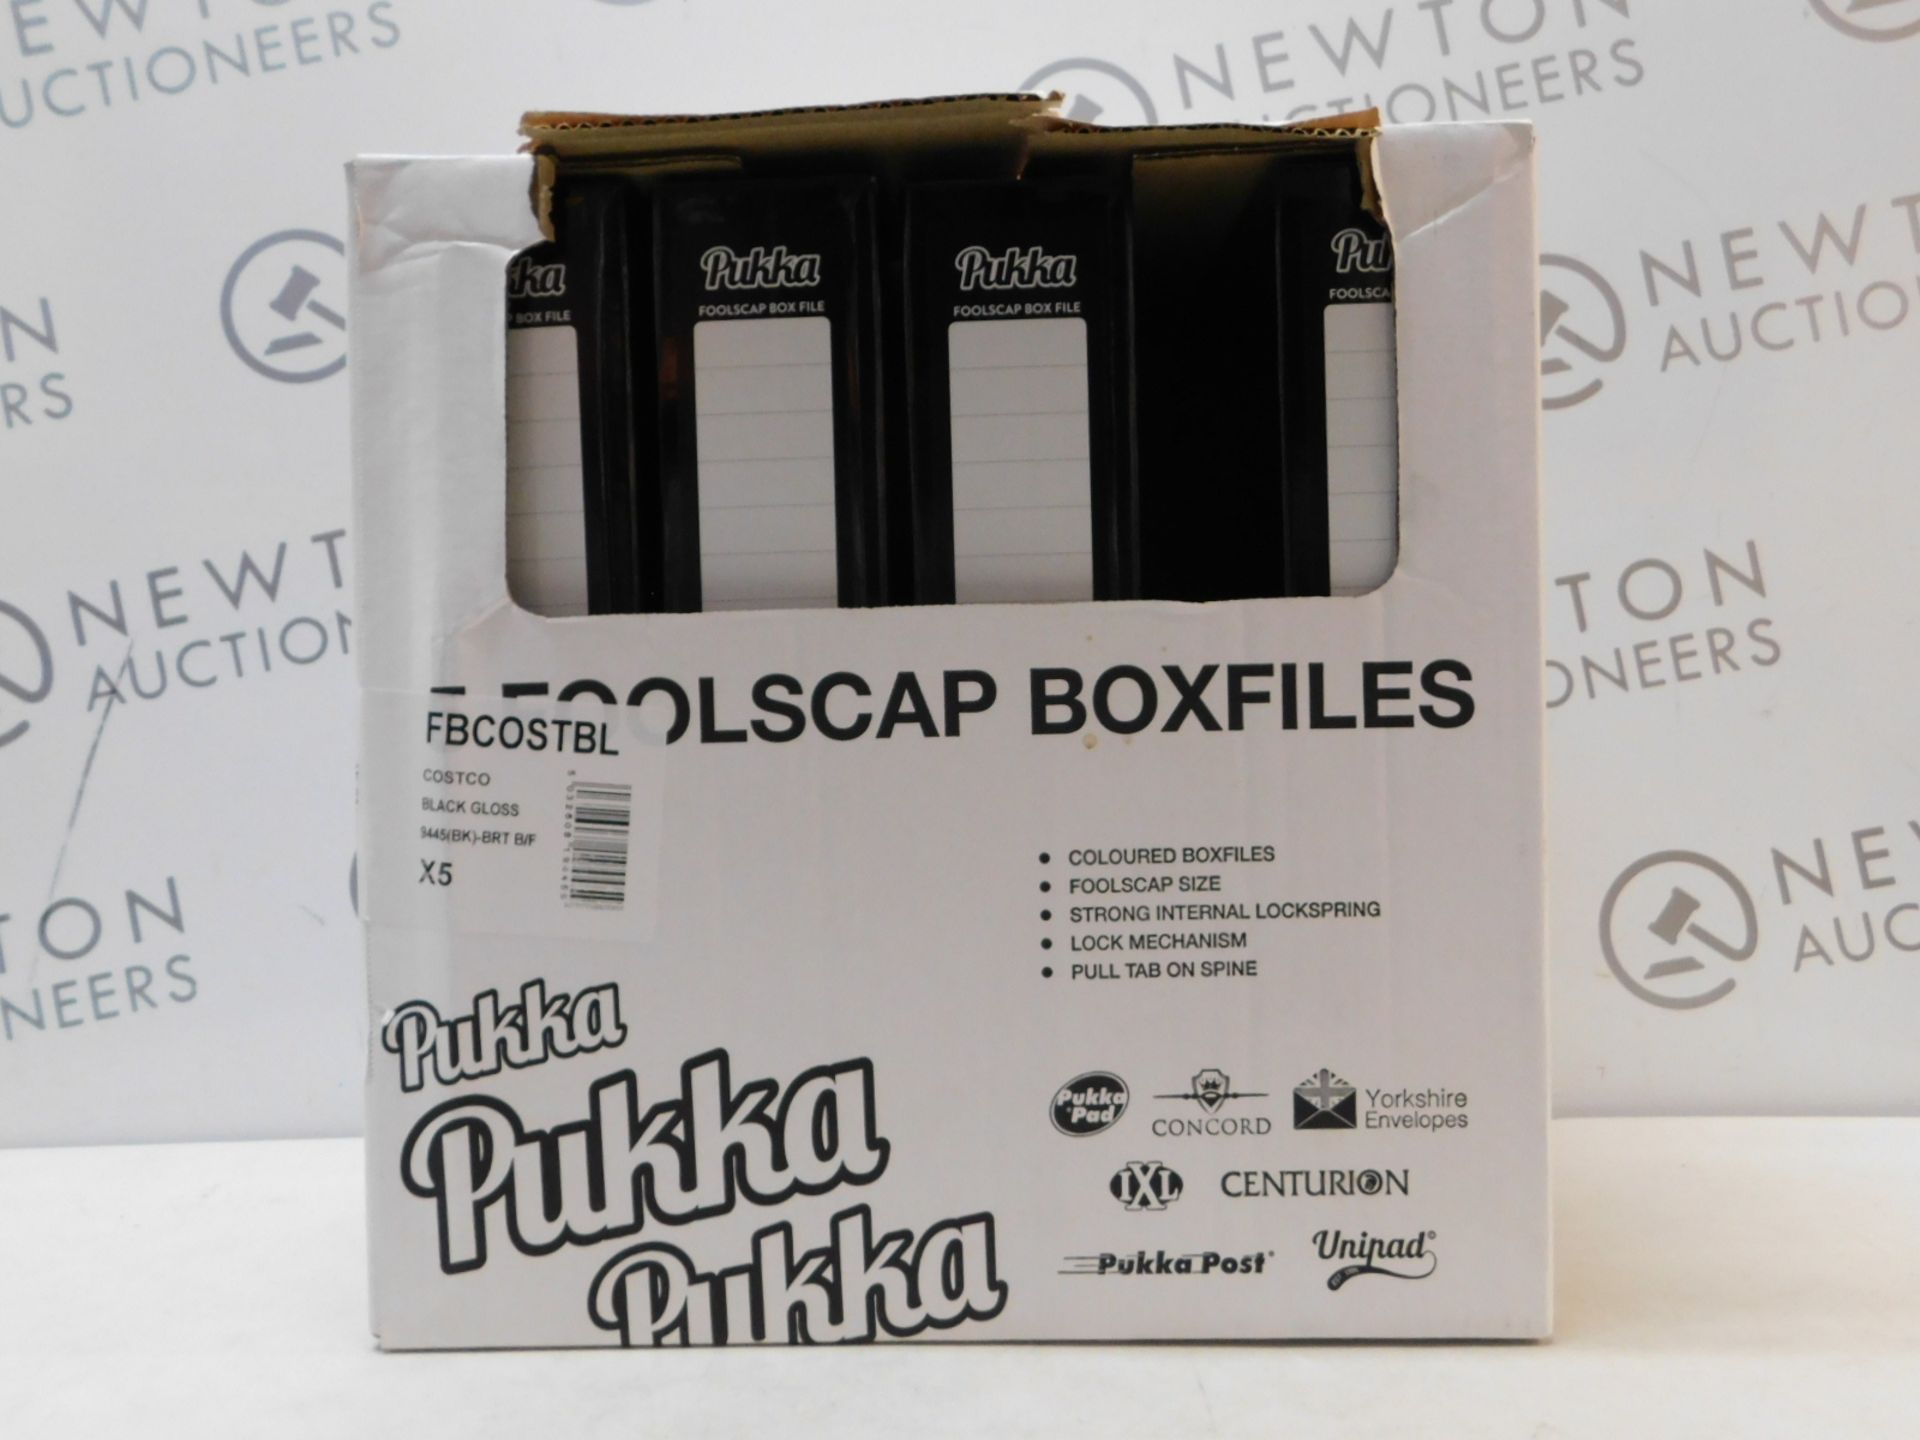 1 BOXED SET OF 4 PUKKA FOOLSCAP BOXFILES RRP Â£29